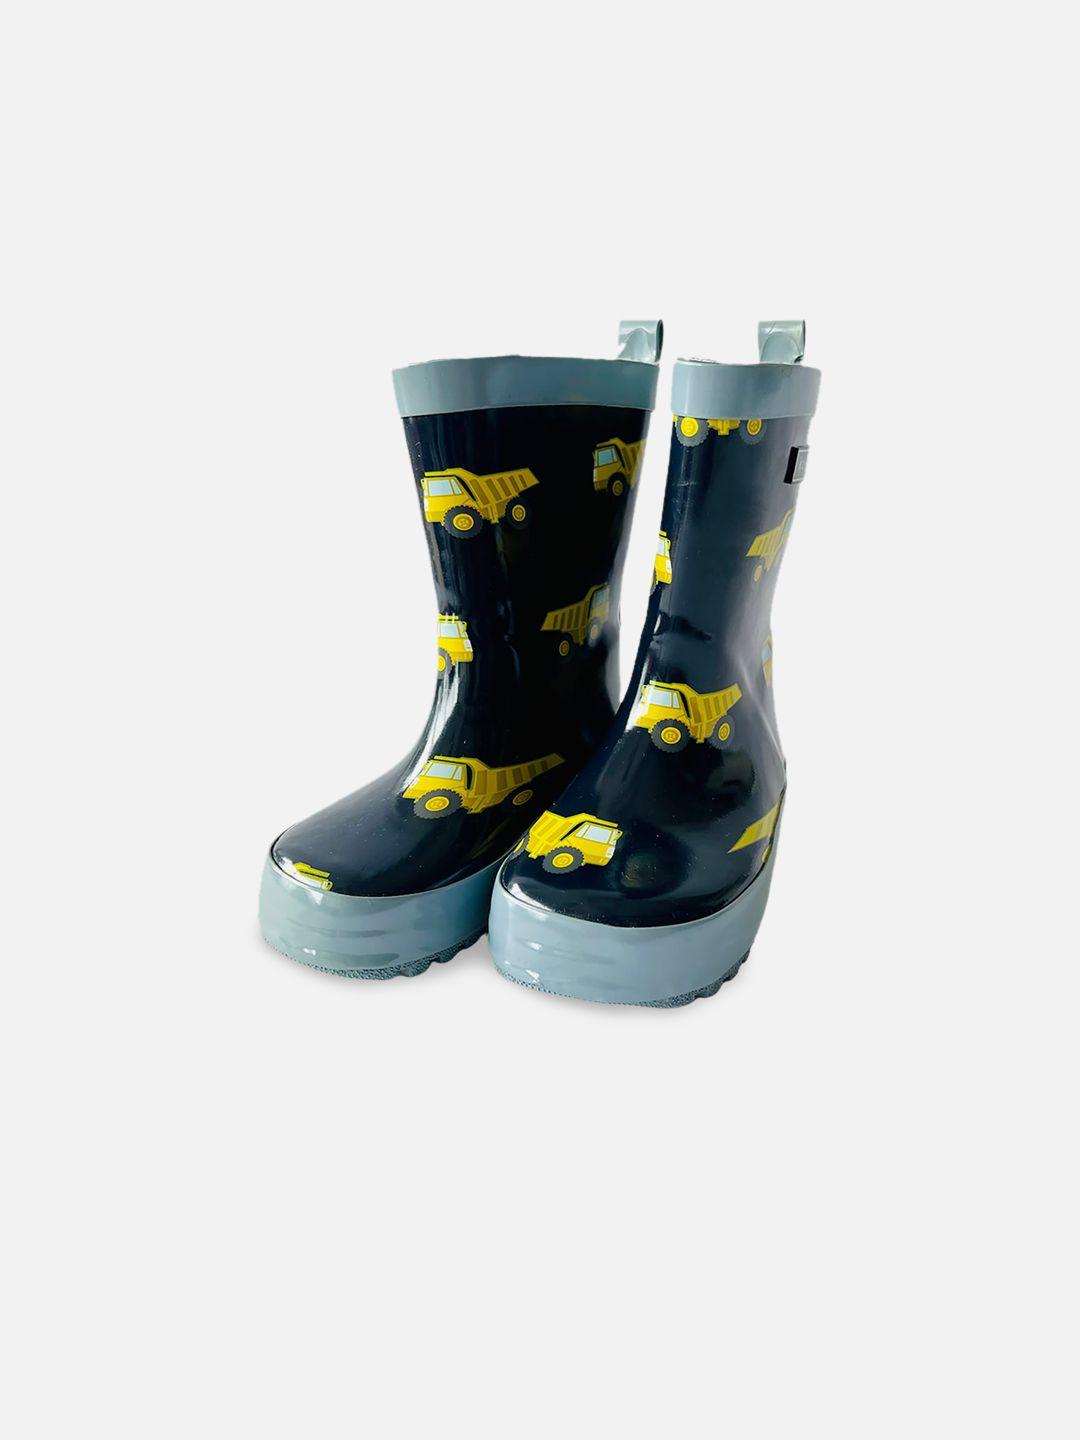 little surprise box llp kids printed waterproof rain boots